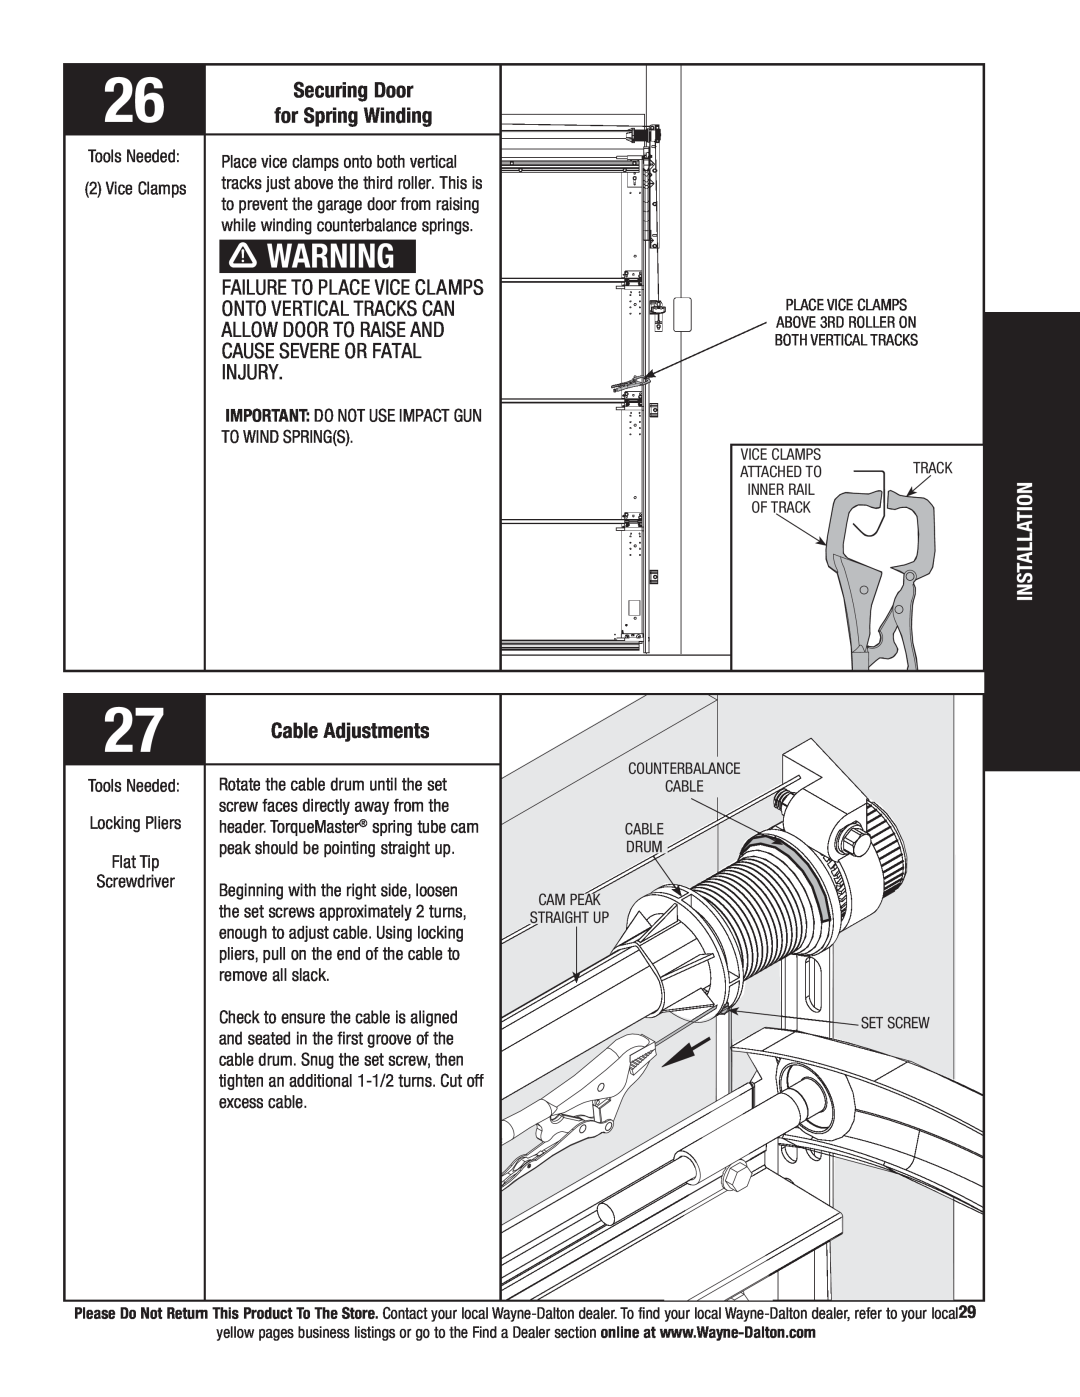 Wayne-Dalton 9800 installation instructions Securing Door, for Spring Winding, Cable Adjustments, Installation 